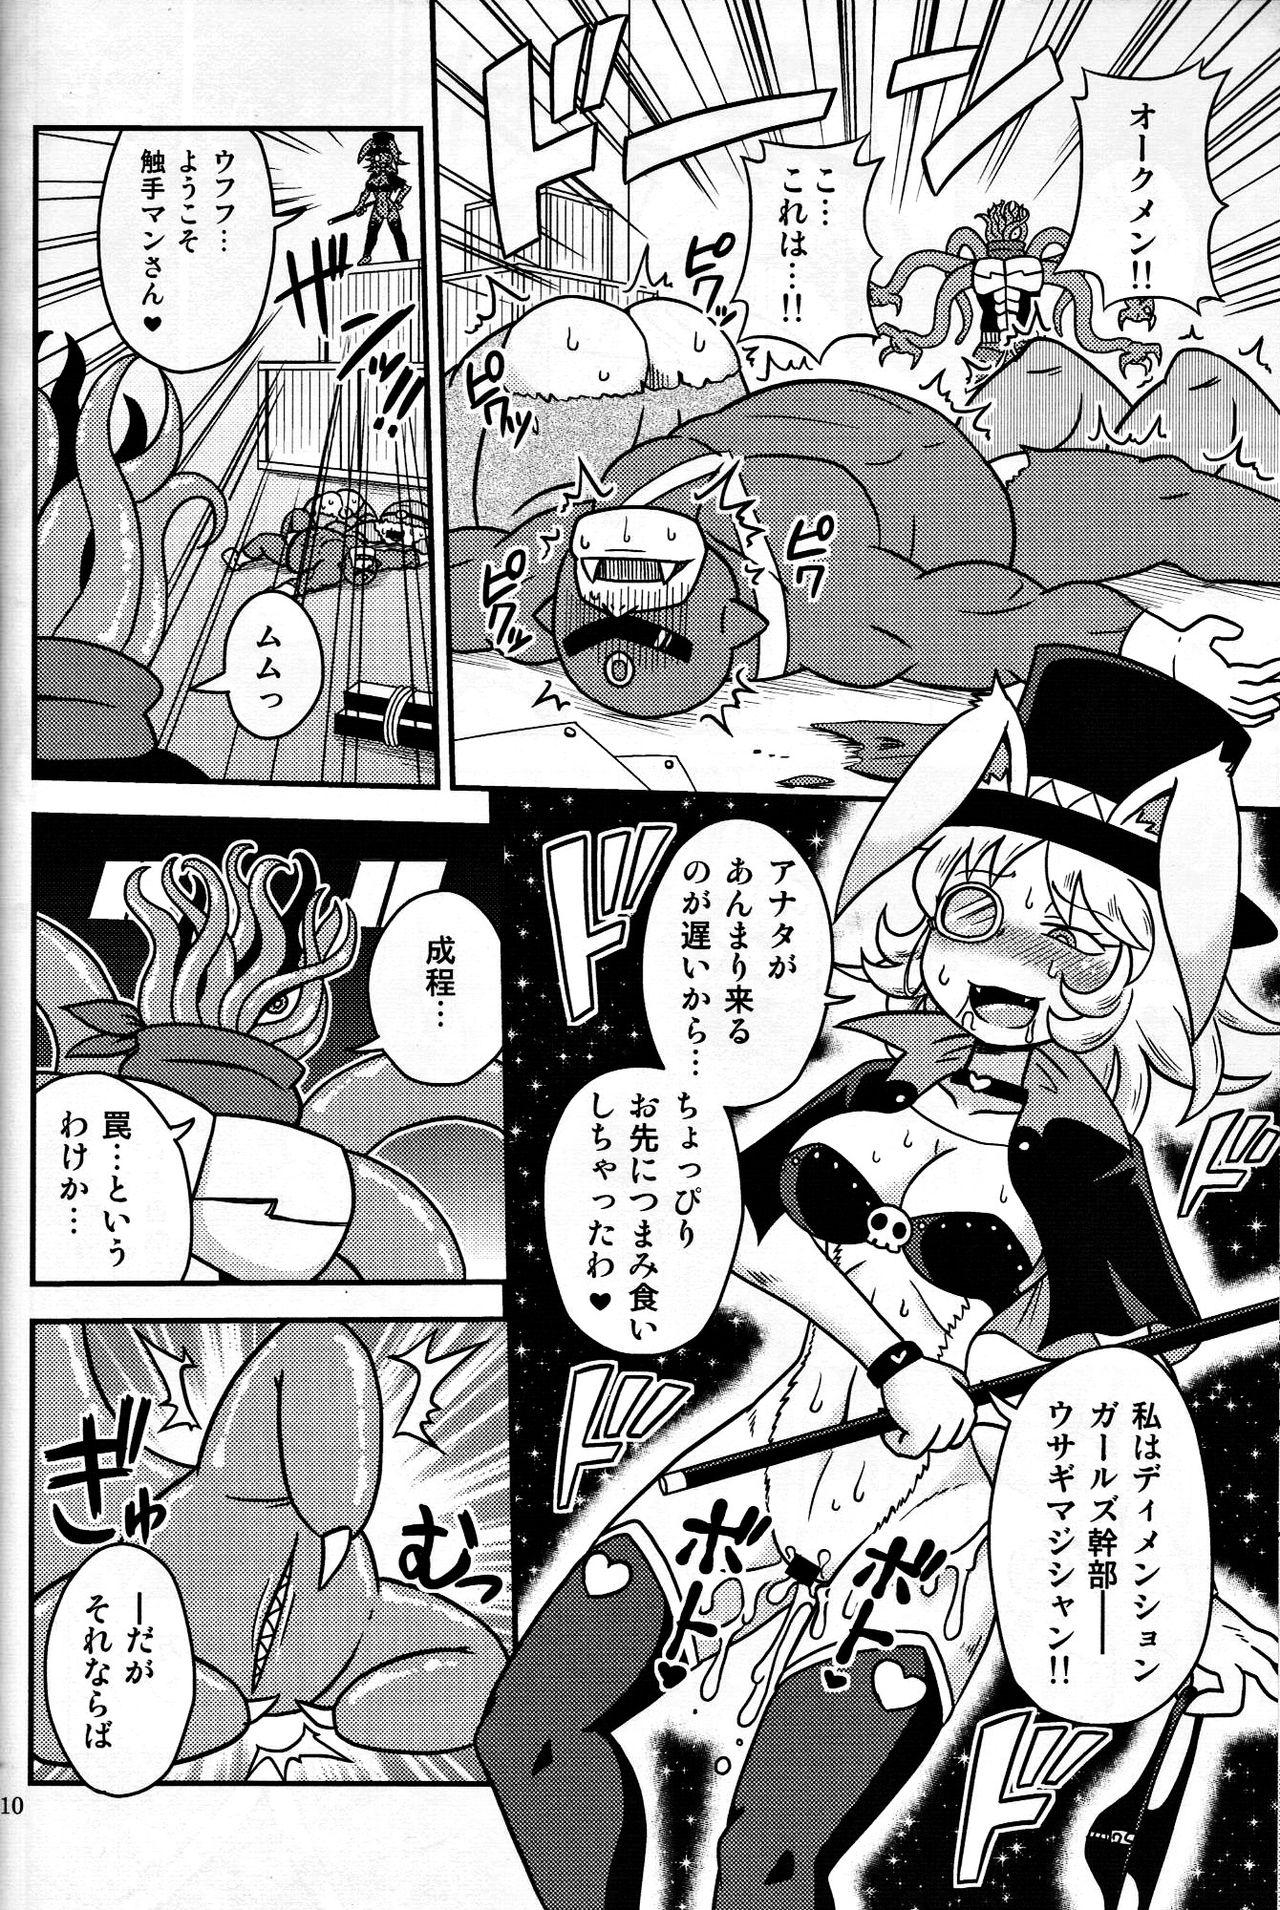 Spreadeagle Shokushu Man VS Usagi Magician Pain - Page 9